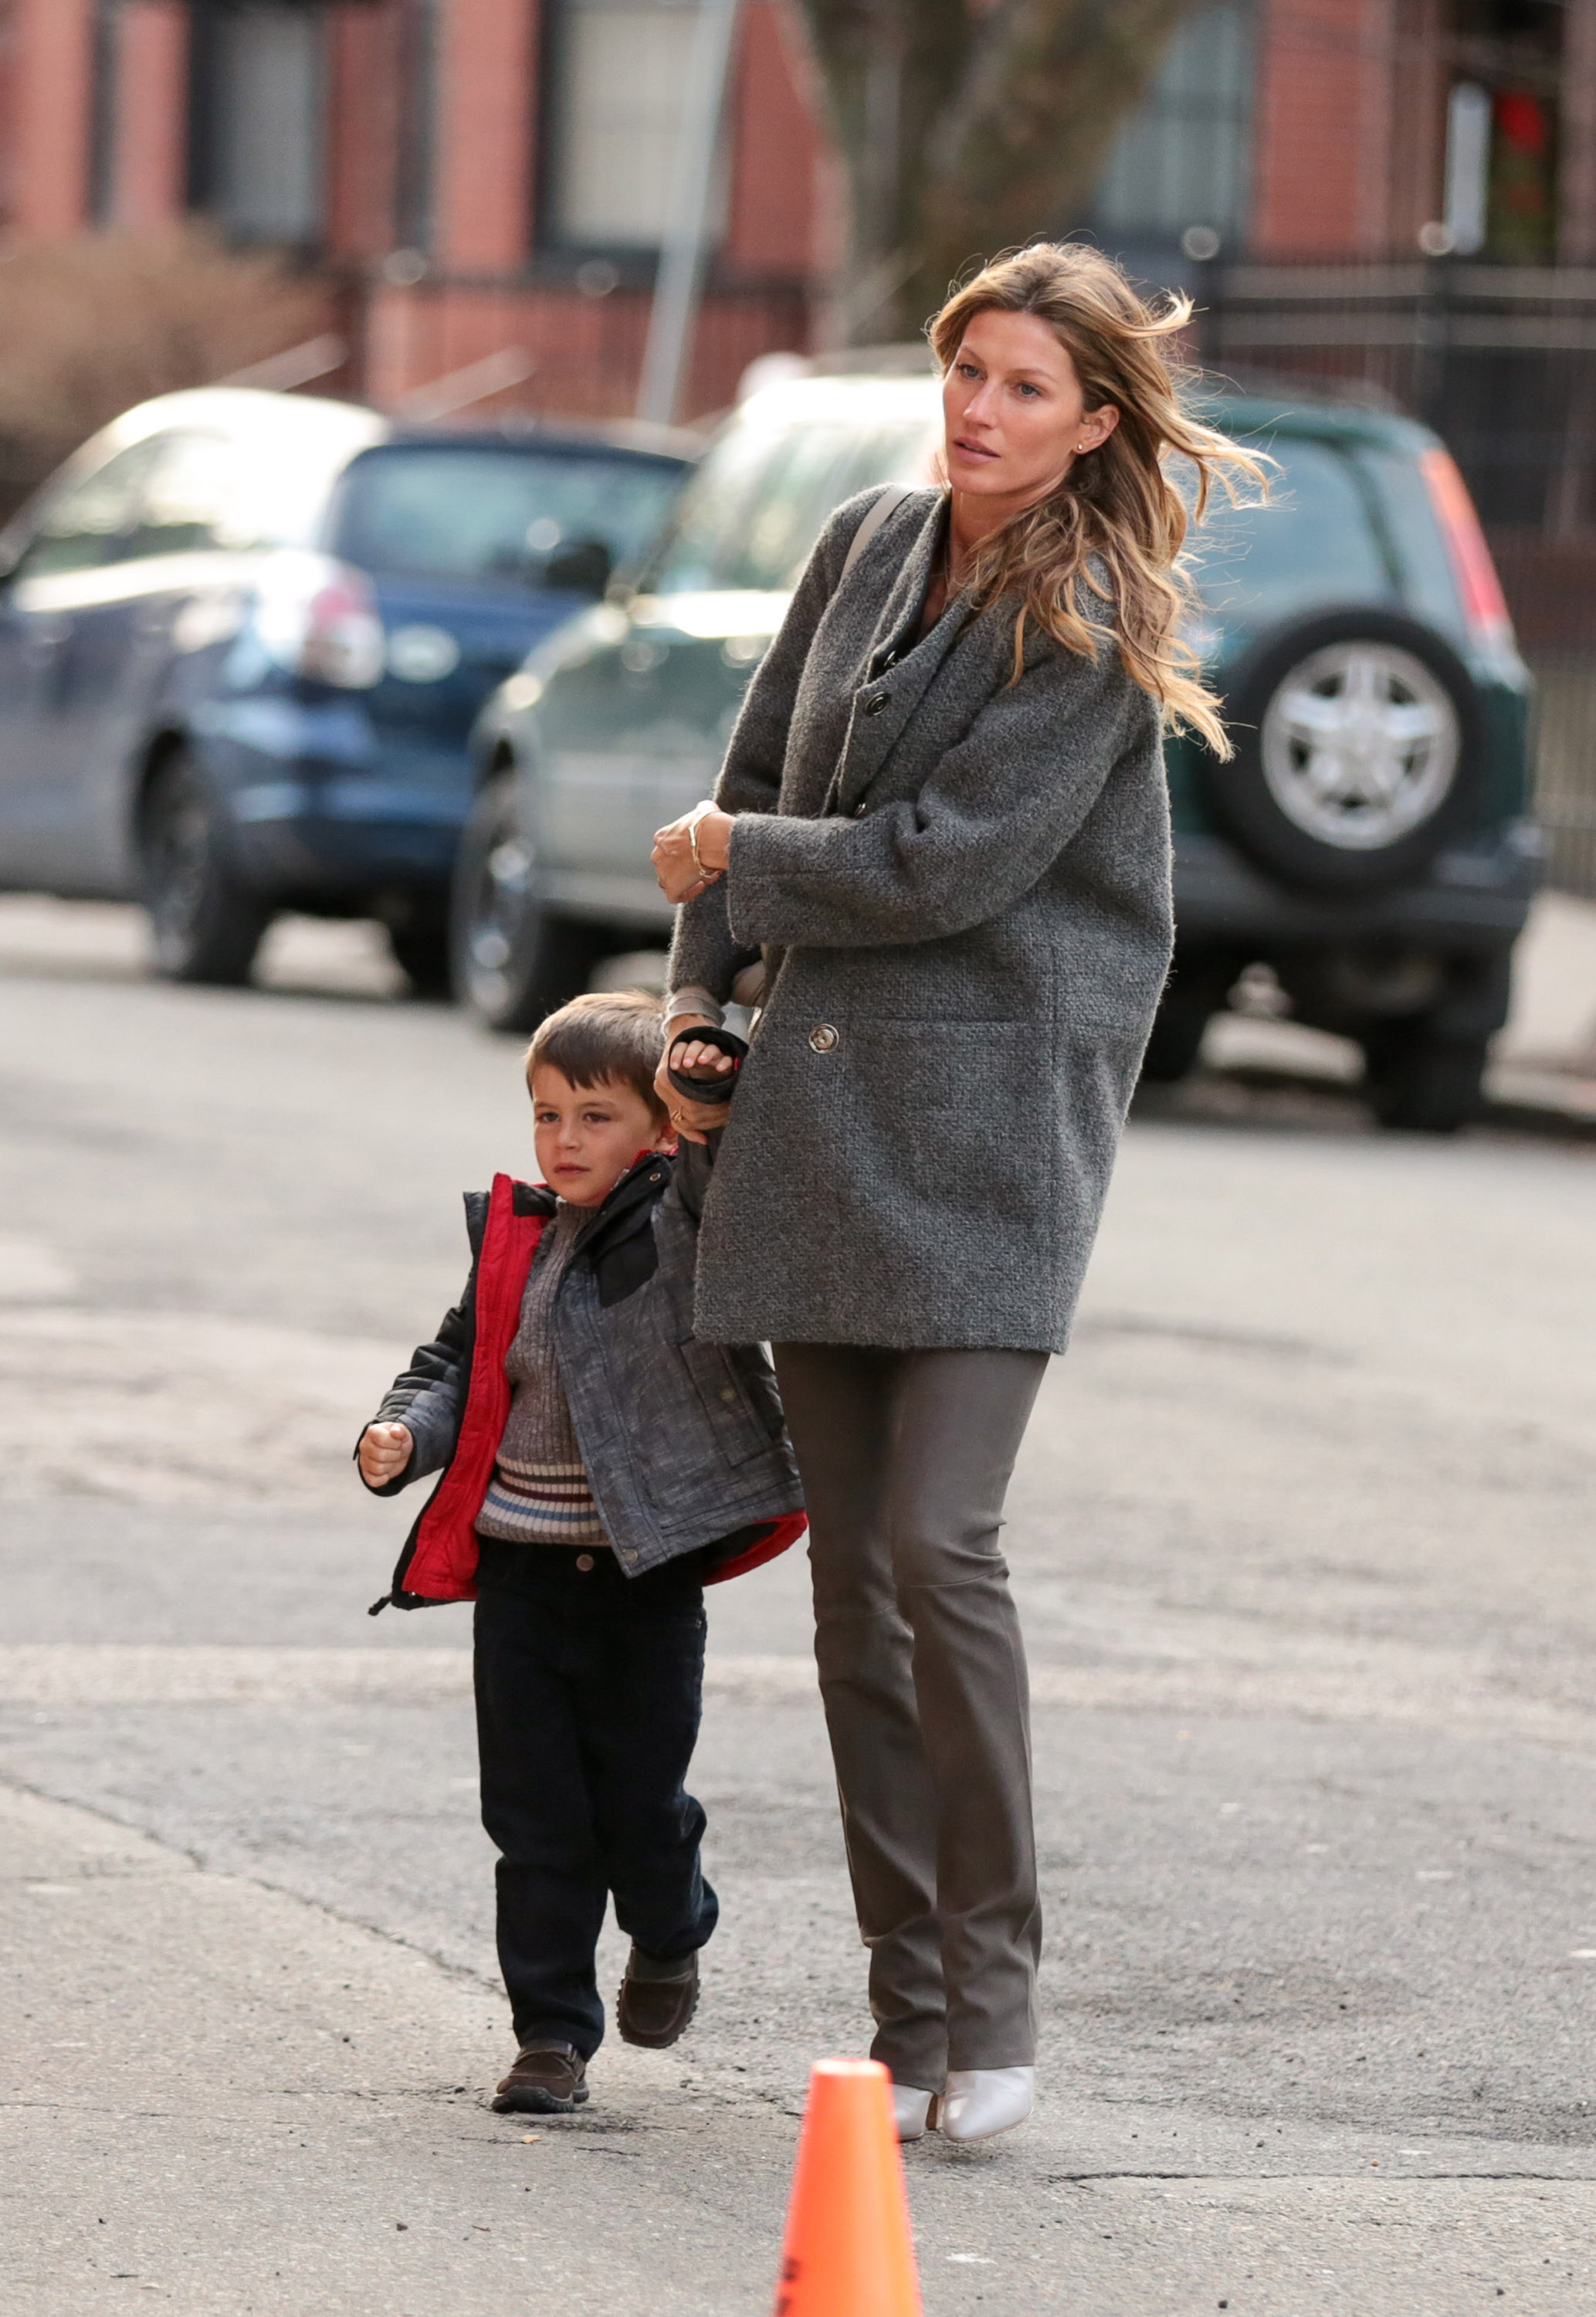 Gisele Bündchen and son Benjamin in Boston, Massachusetts on December 24, 2013 | Source: Getty Images